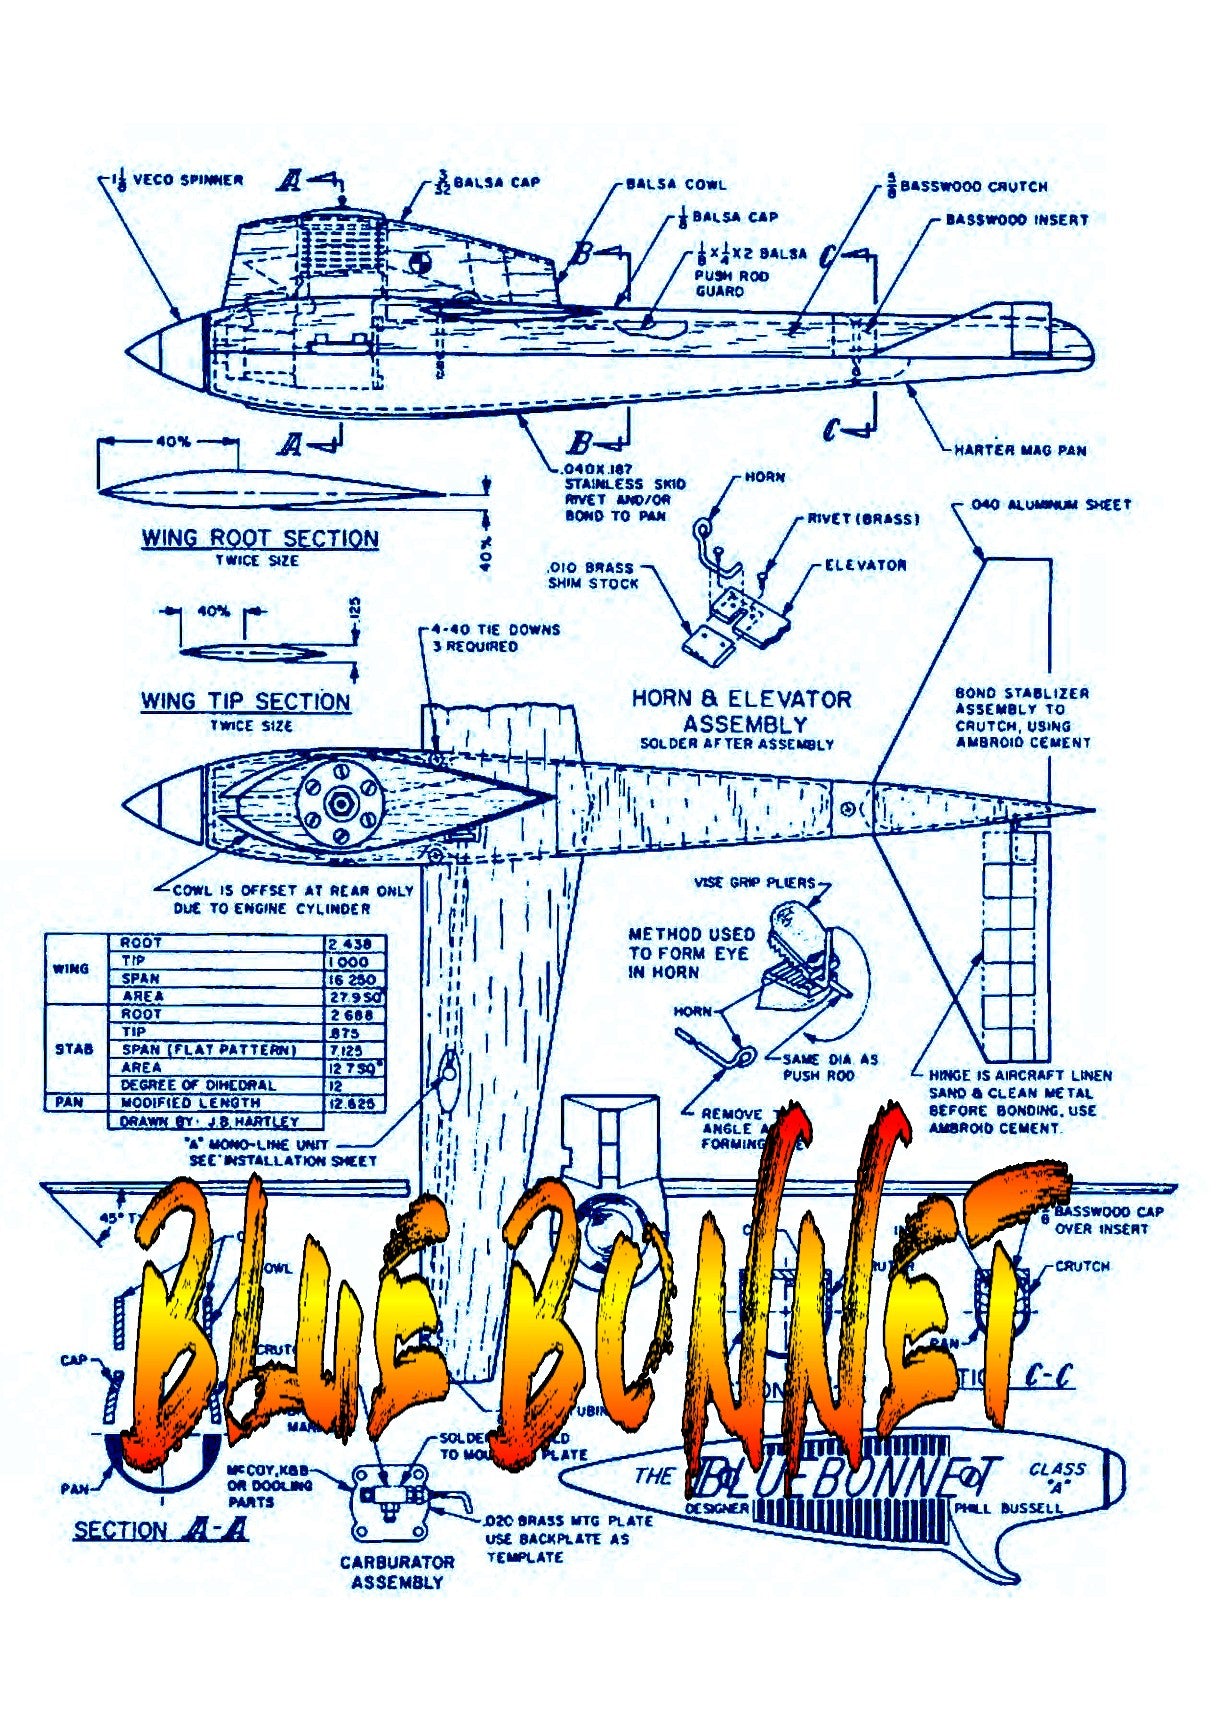 full size printed plan  control line speed blue bonnet winner in class "a" speed '64